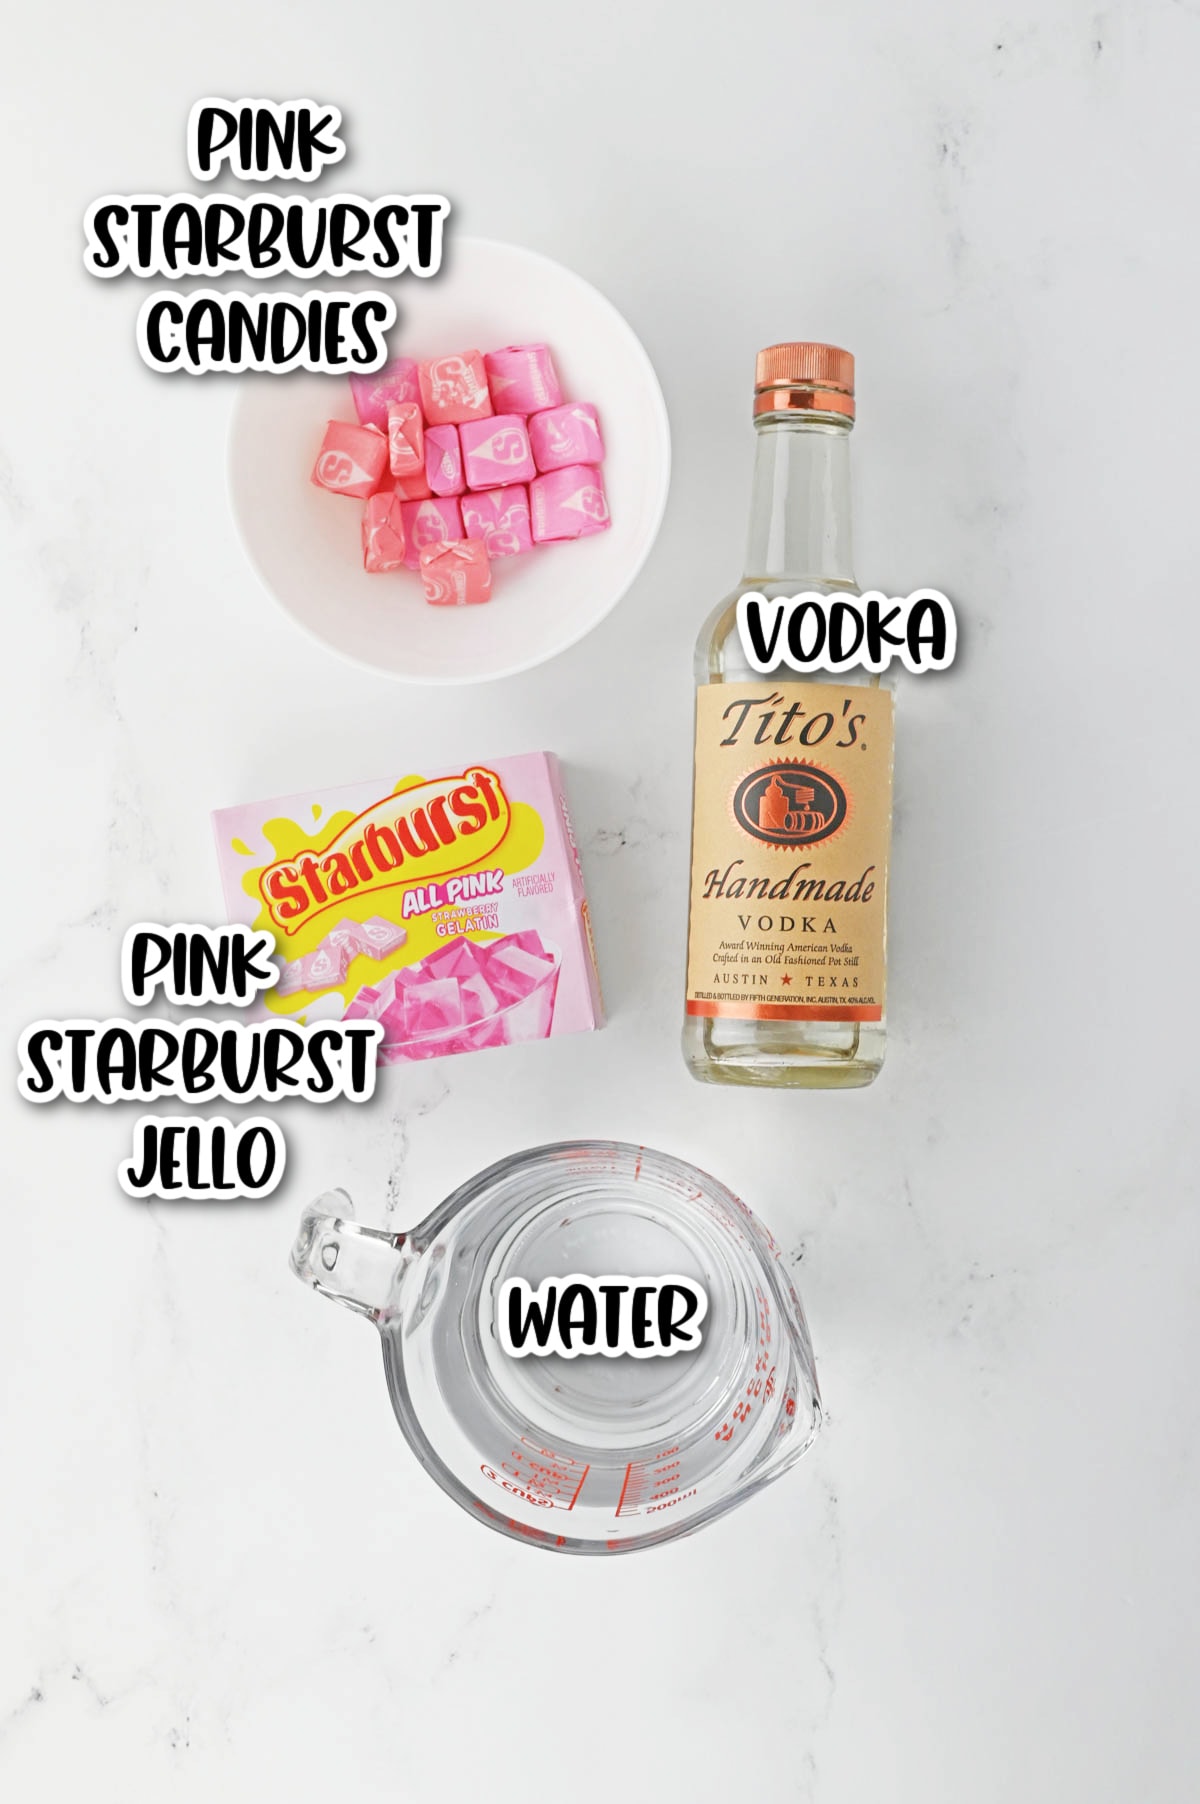 Pink starburst jello ingredients.